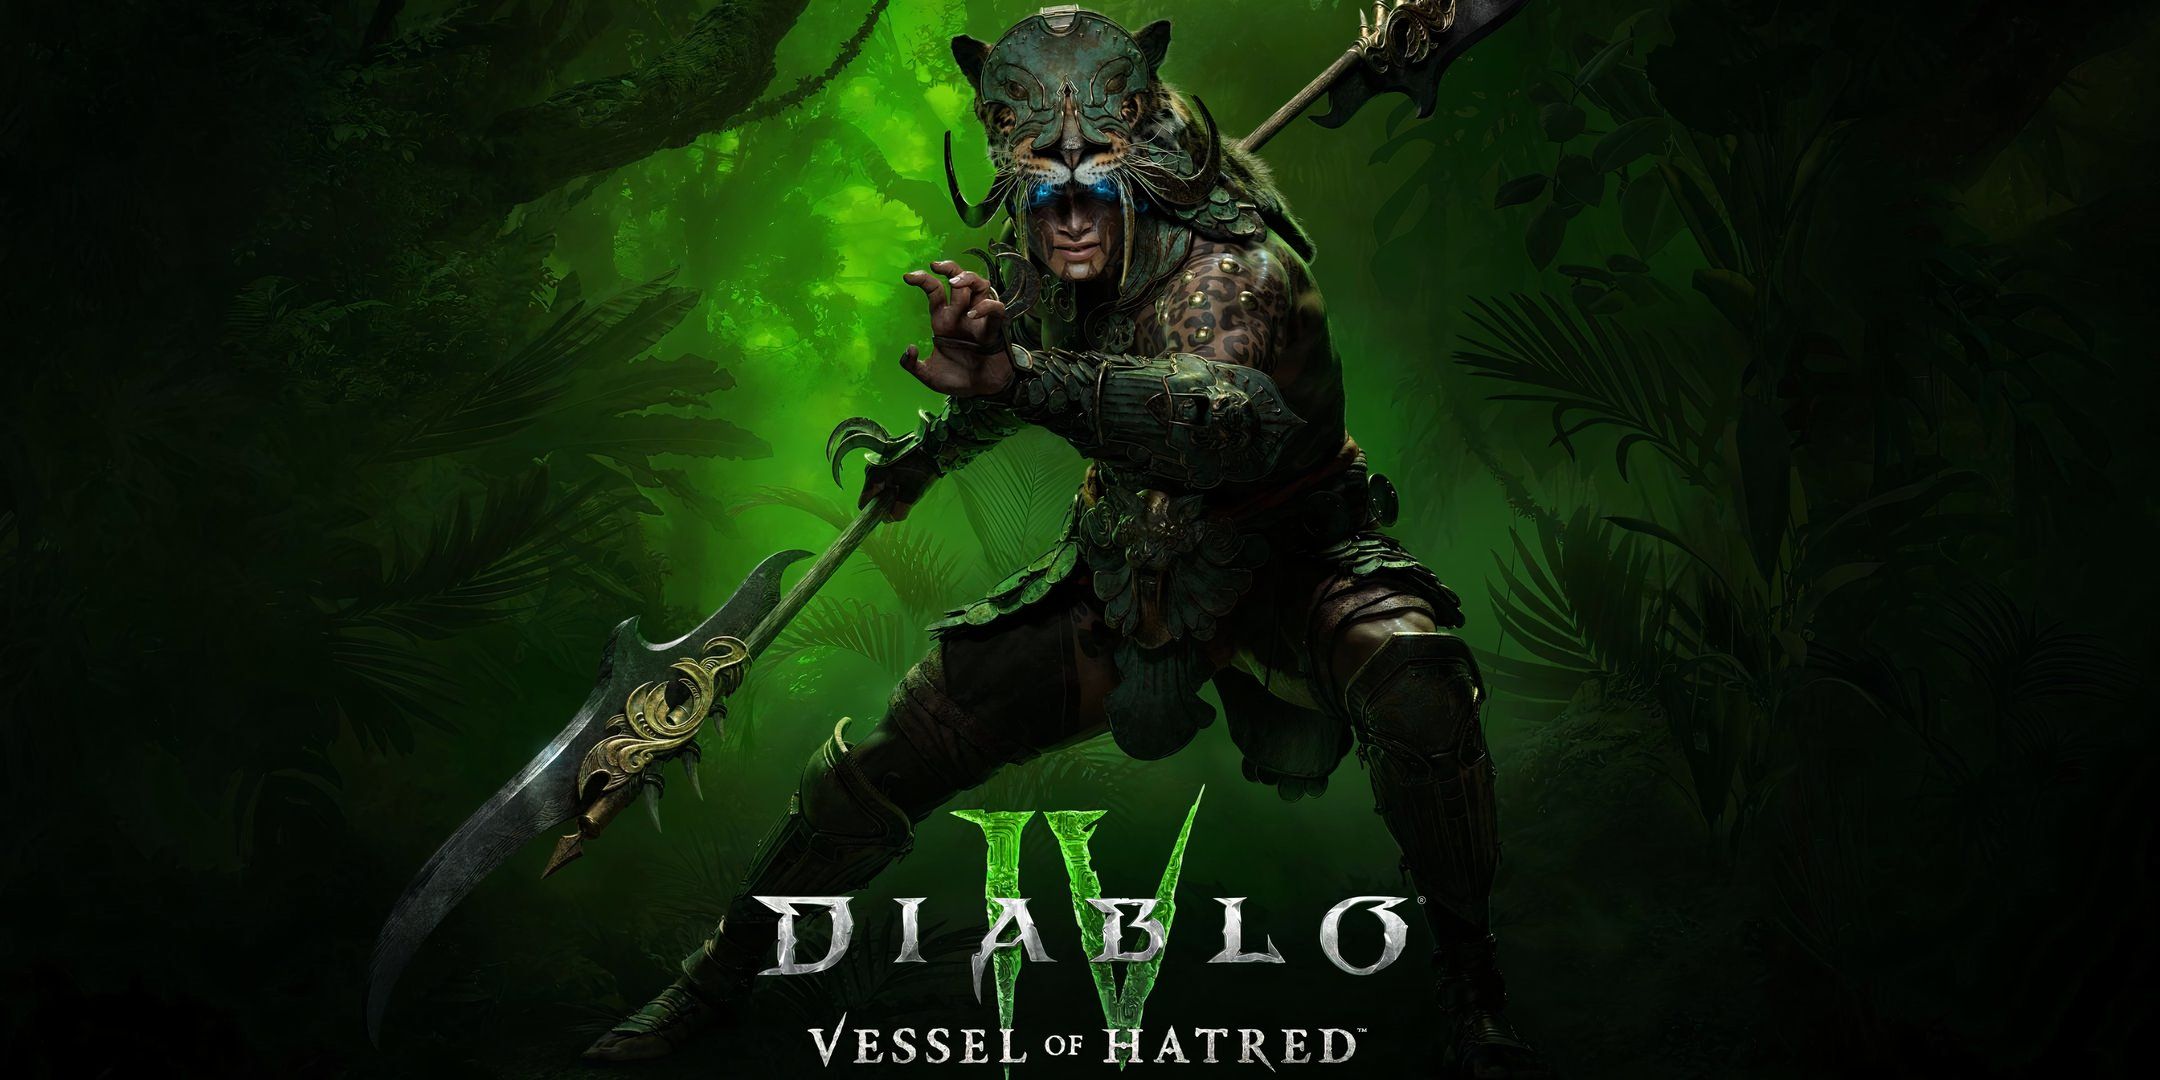 Arte da capa e logotipo do Vessel of Hatred de Diablo 4